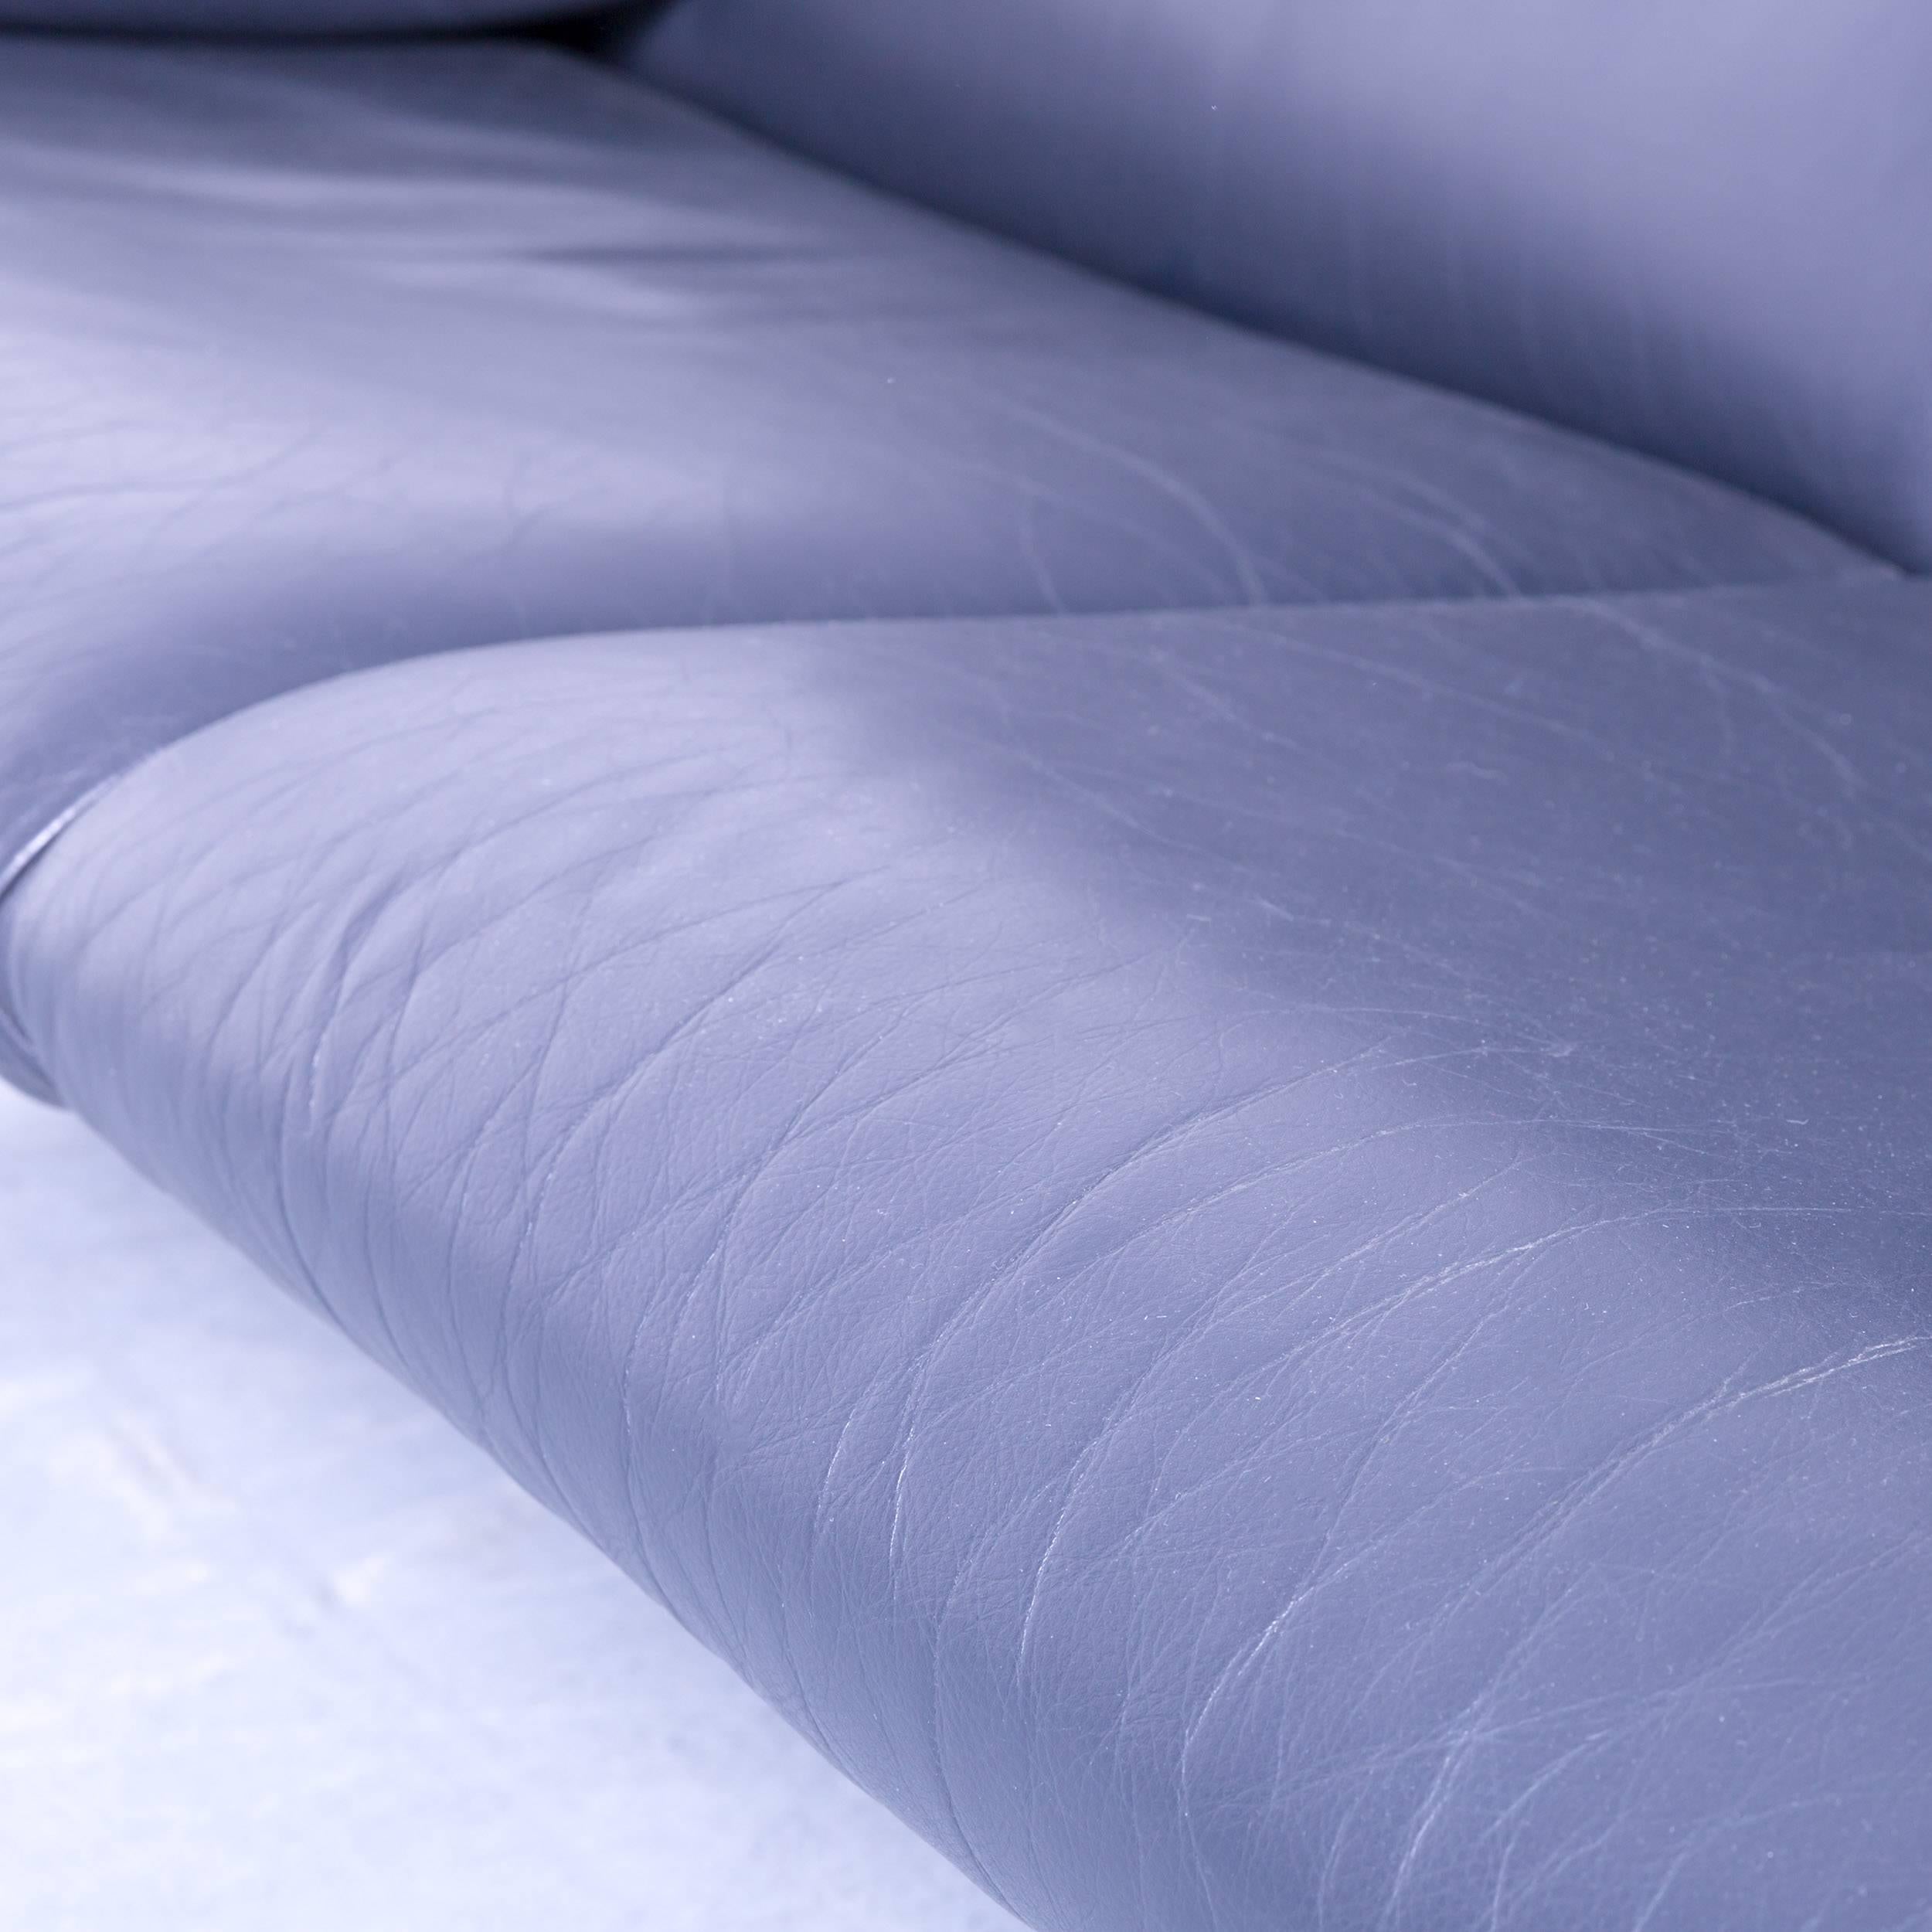 Swiss De Sede DS 10 Designer Sofa Navy Blue Leather Three-Seat Couch Switzerland